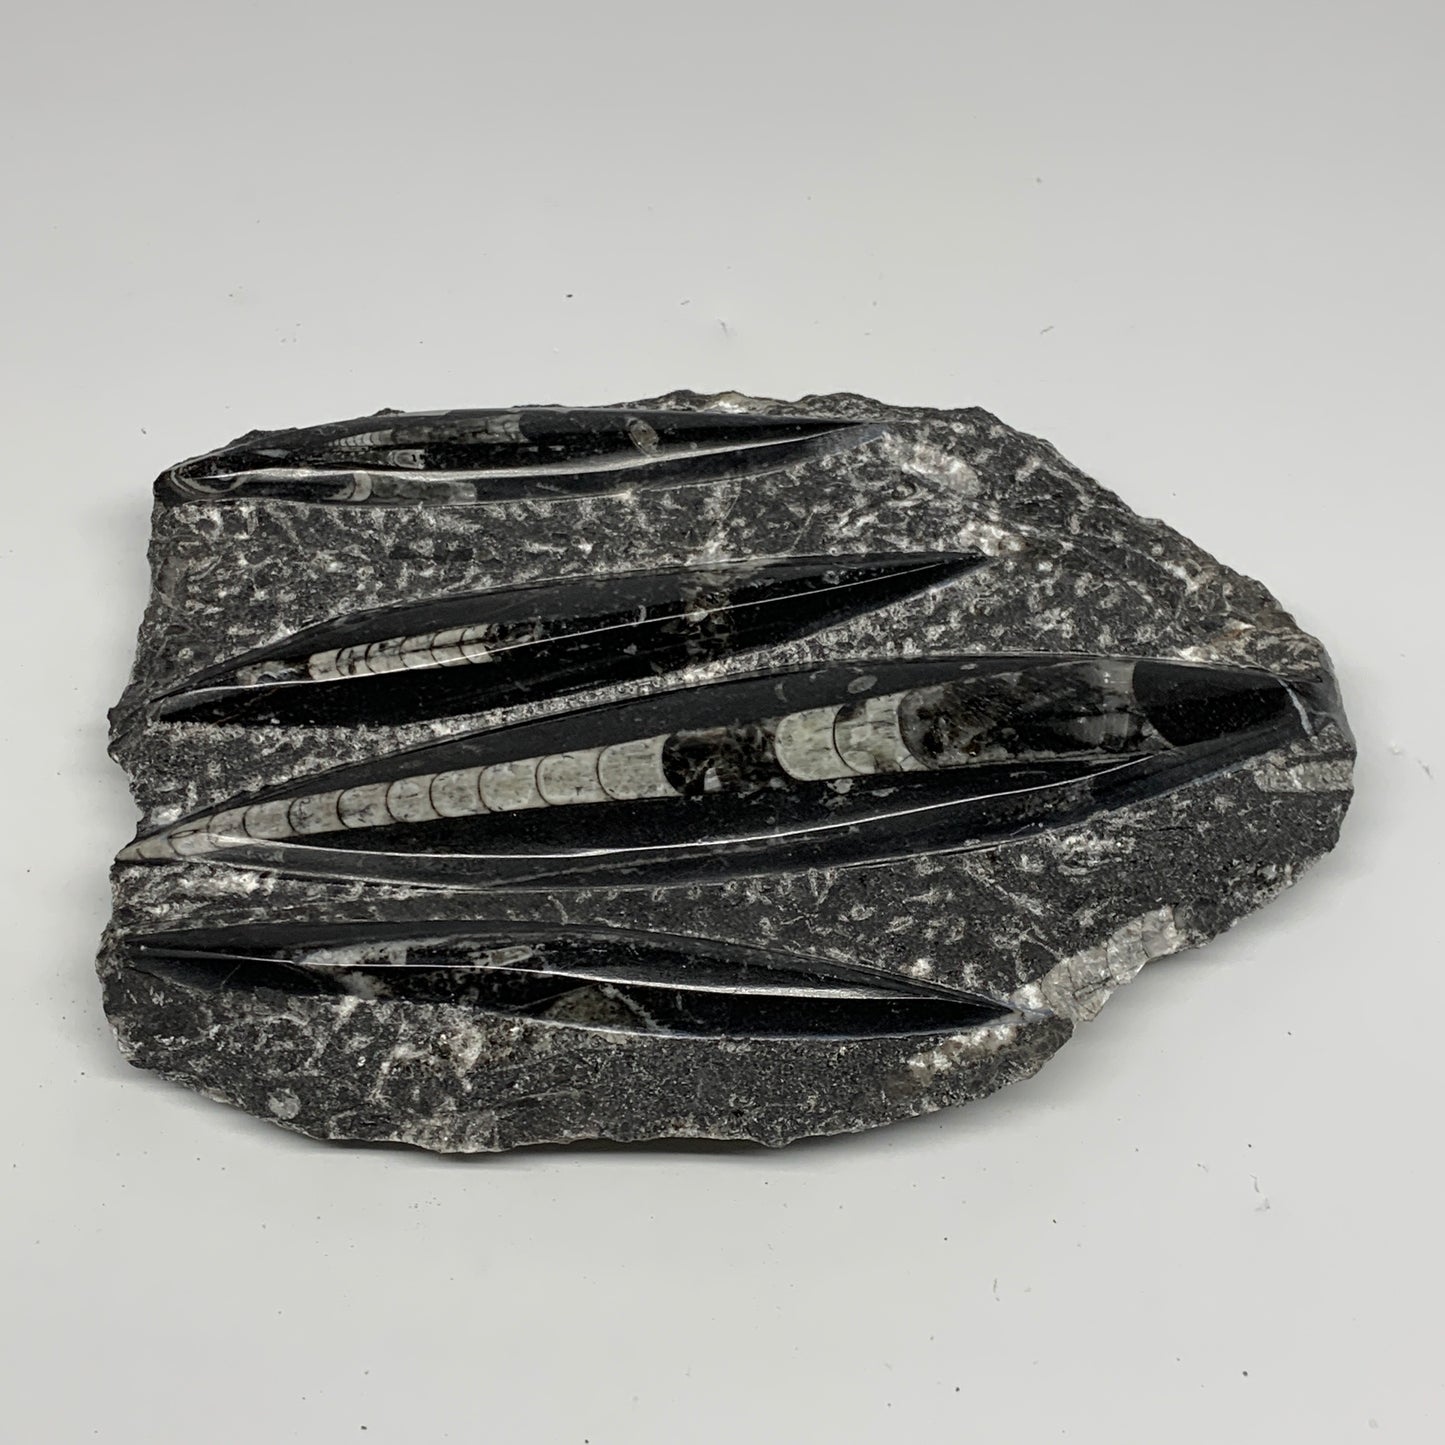 1115g,8"x6"x1" Fossils Orthoceras Plate Plaque SQUID, Home Decor, B23492